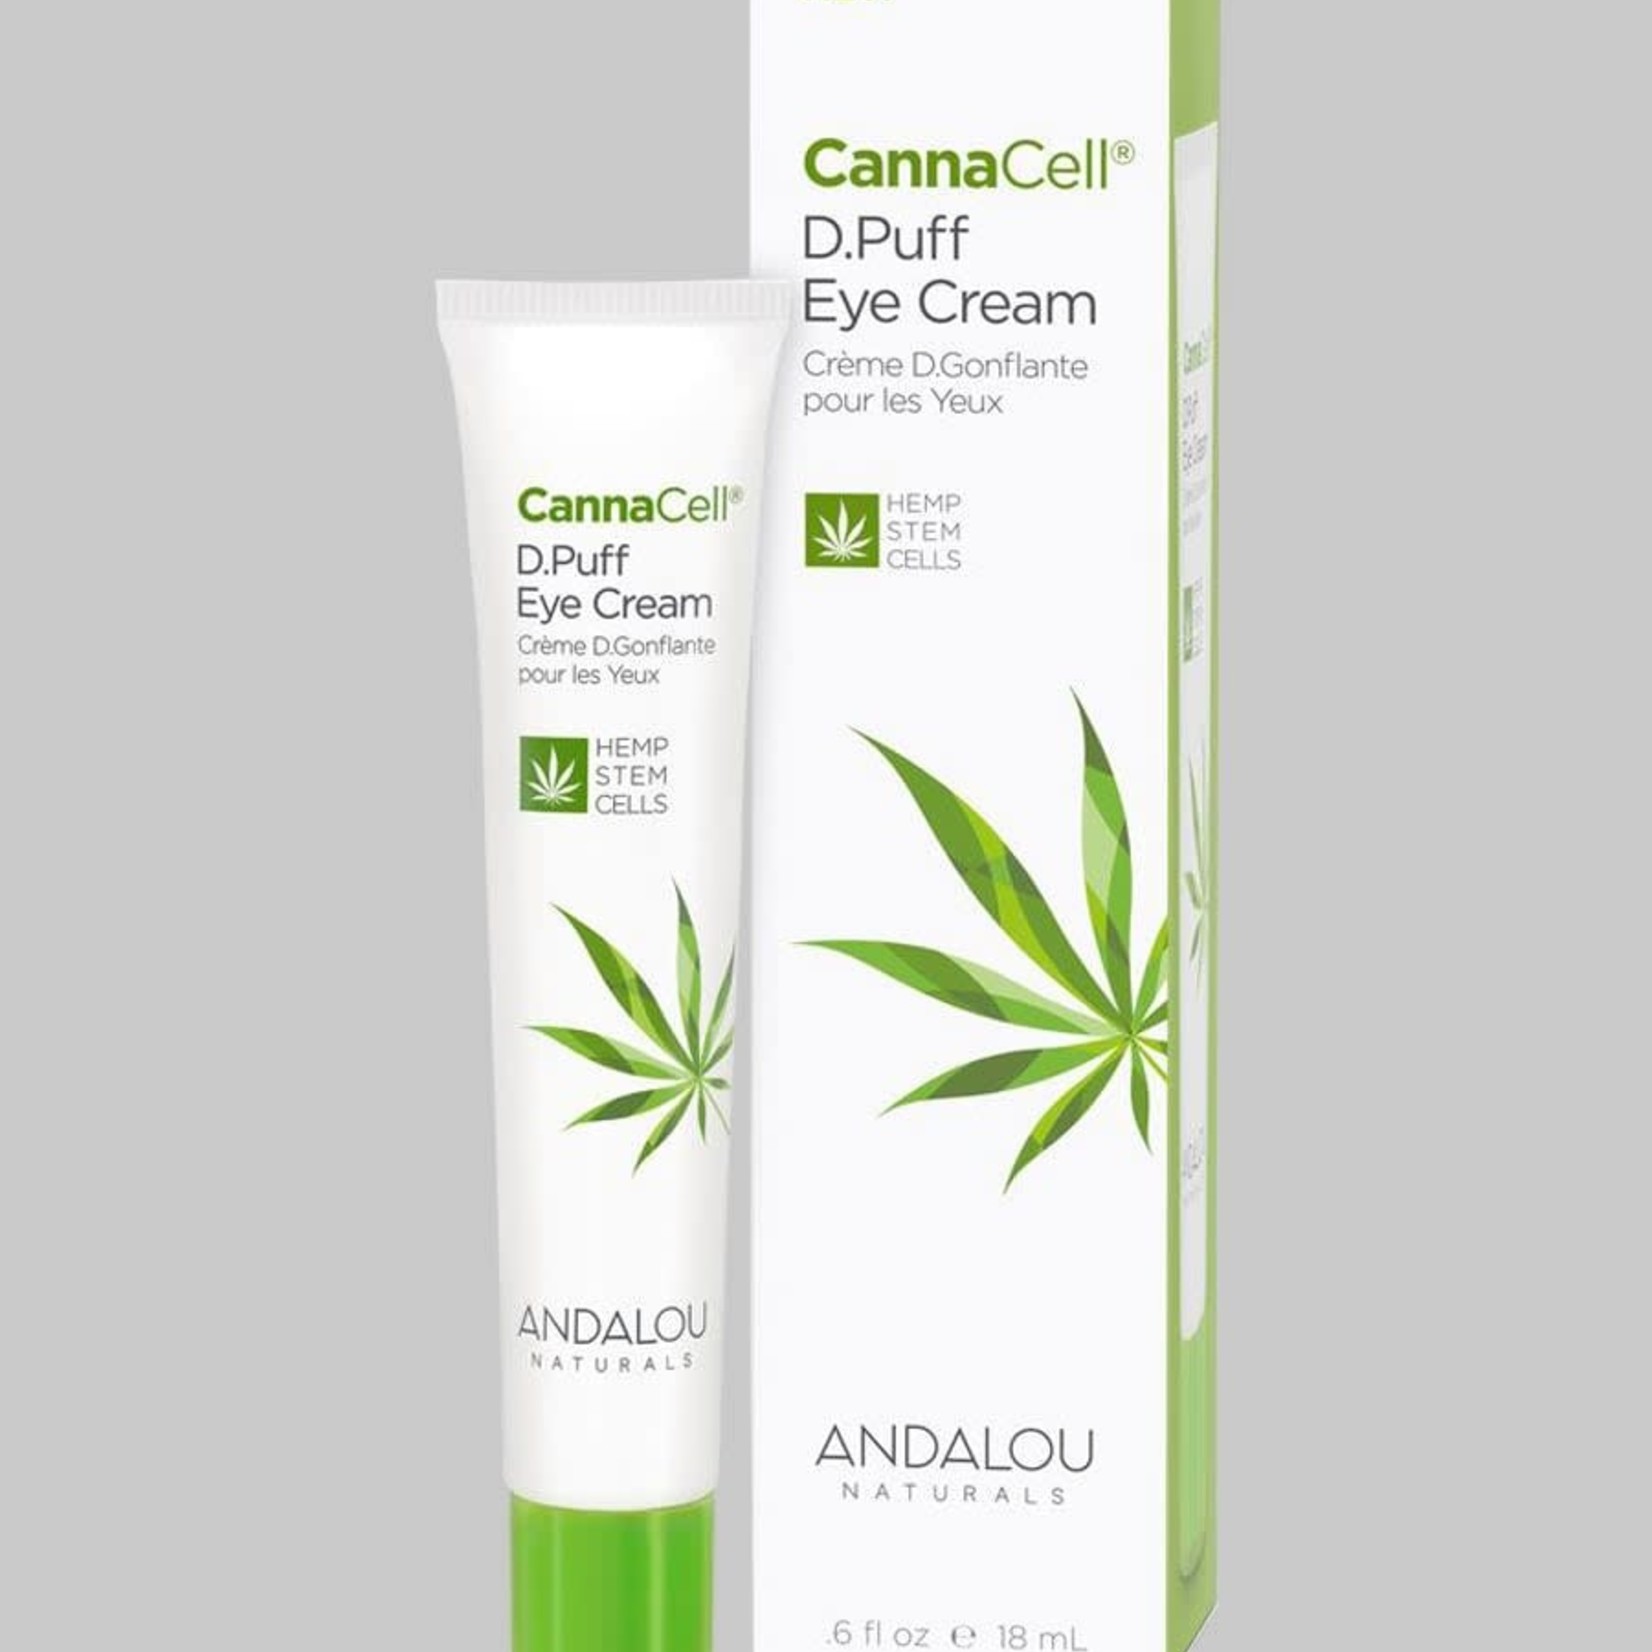 Andalou Andalou CannaCell D.Puff Eye Cream 18ml